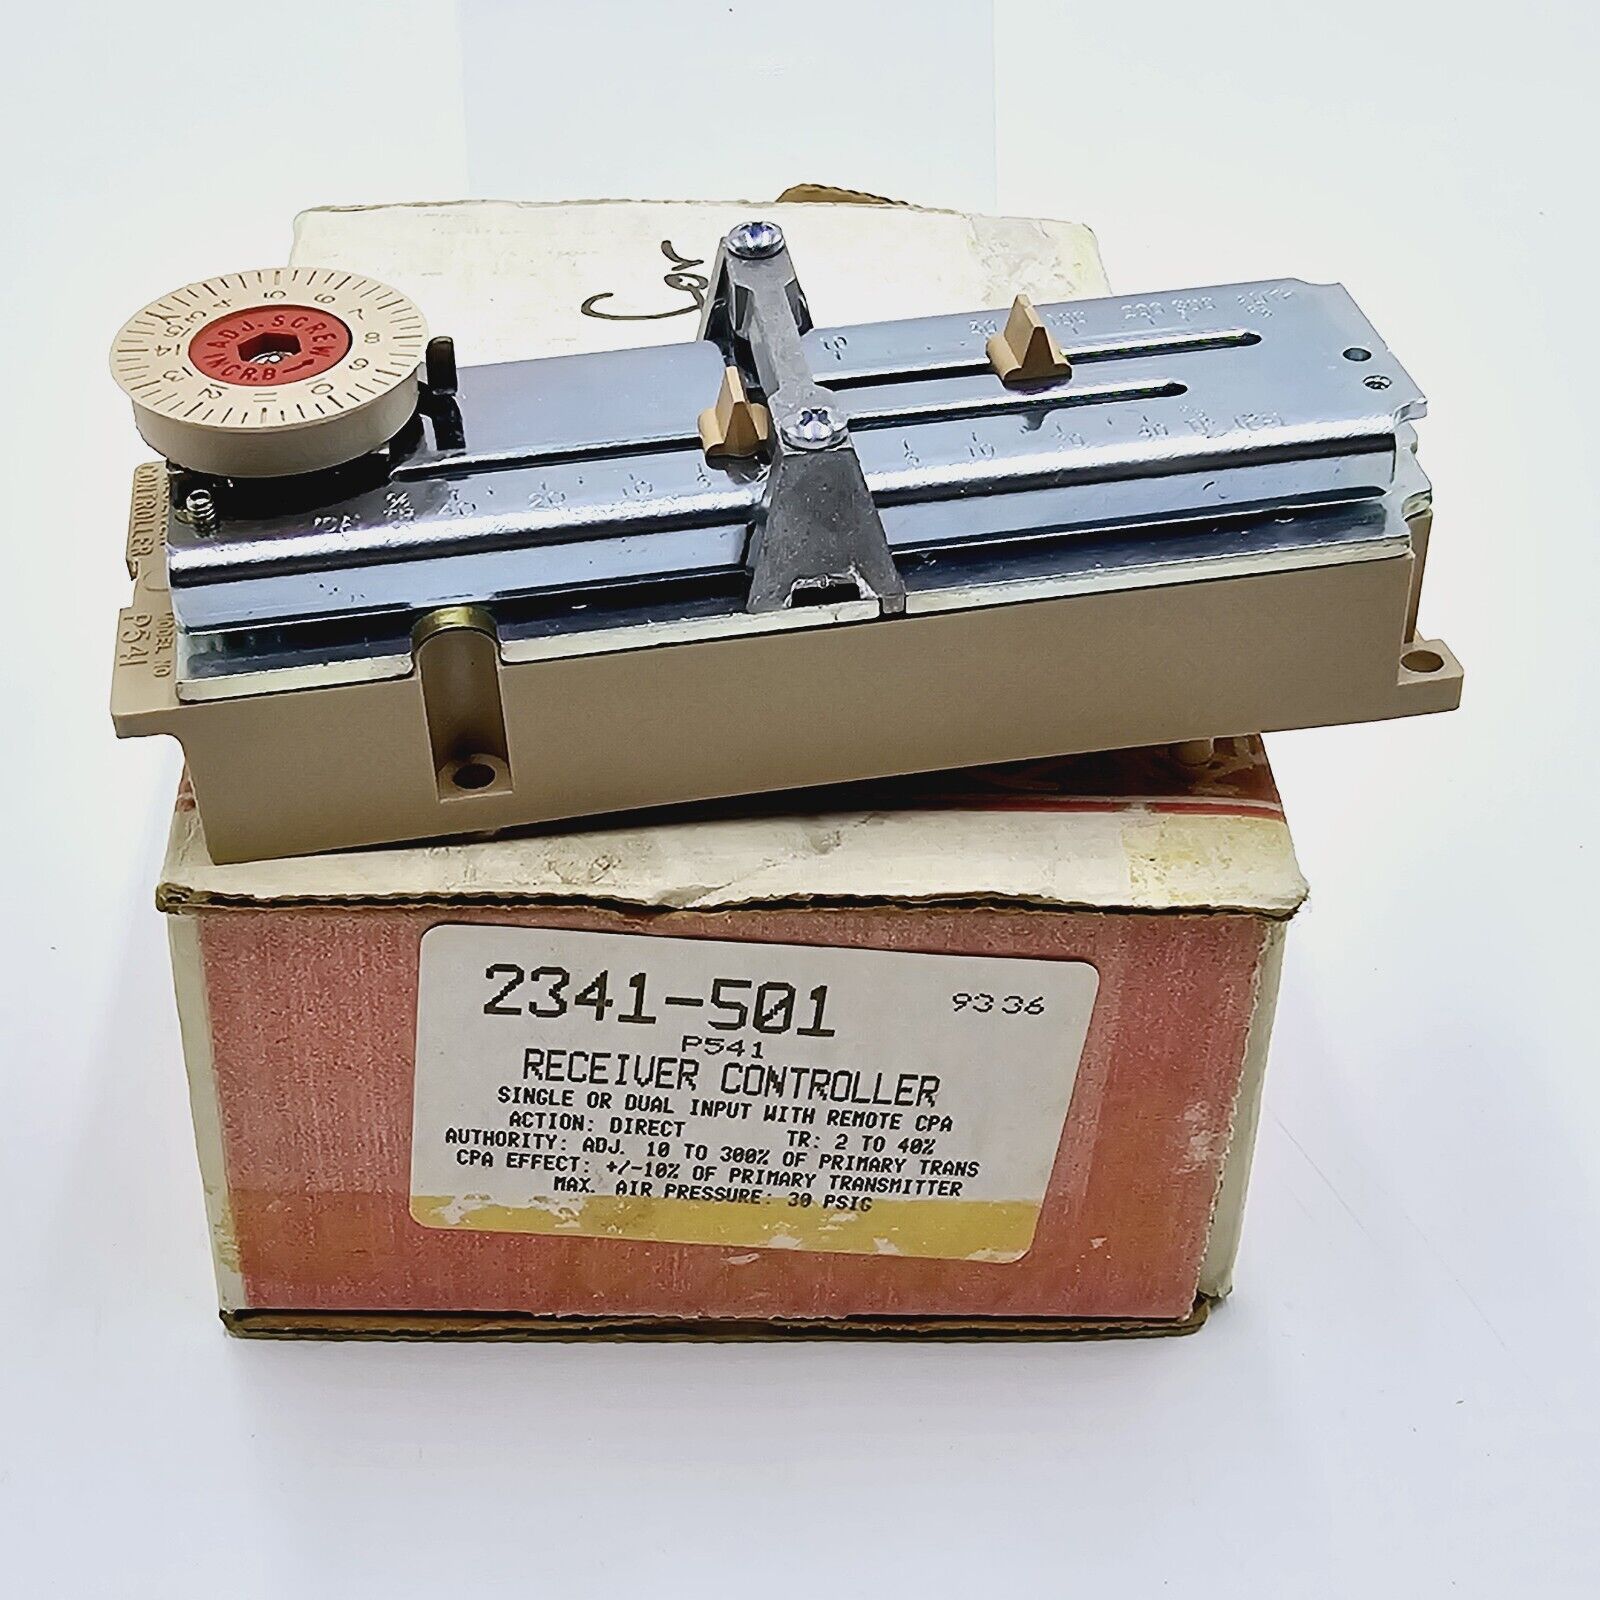 Robertshaw 2341-501 Receiver Controller New In Box